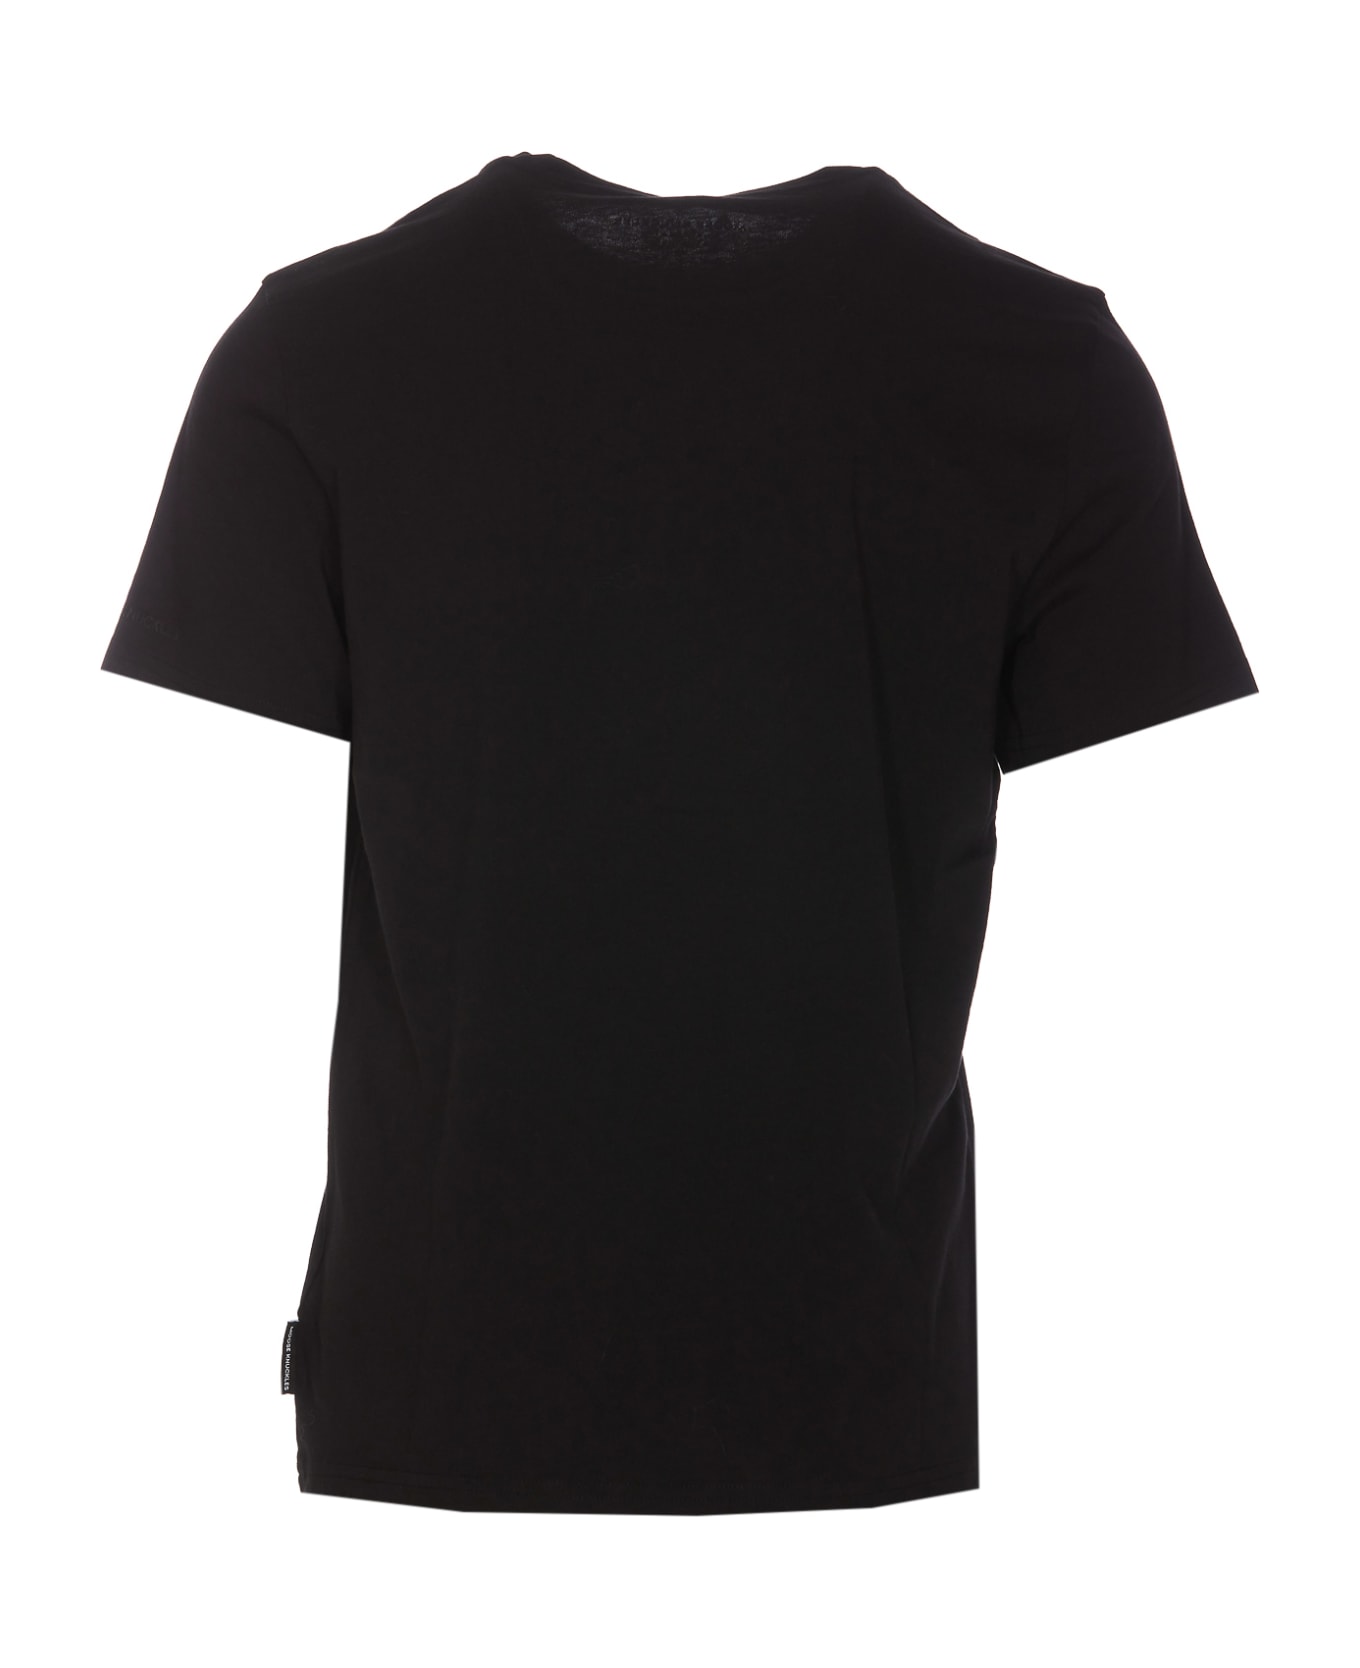 Moose Knuckles Satellite T-shirt - Black